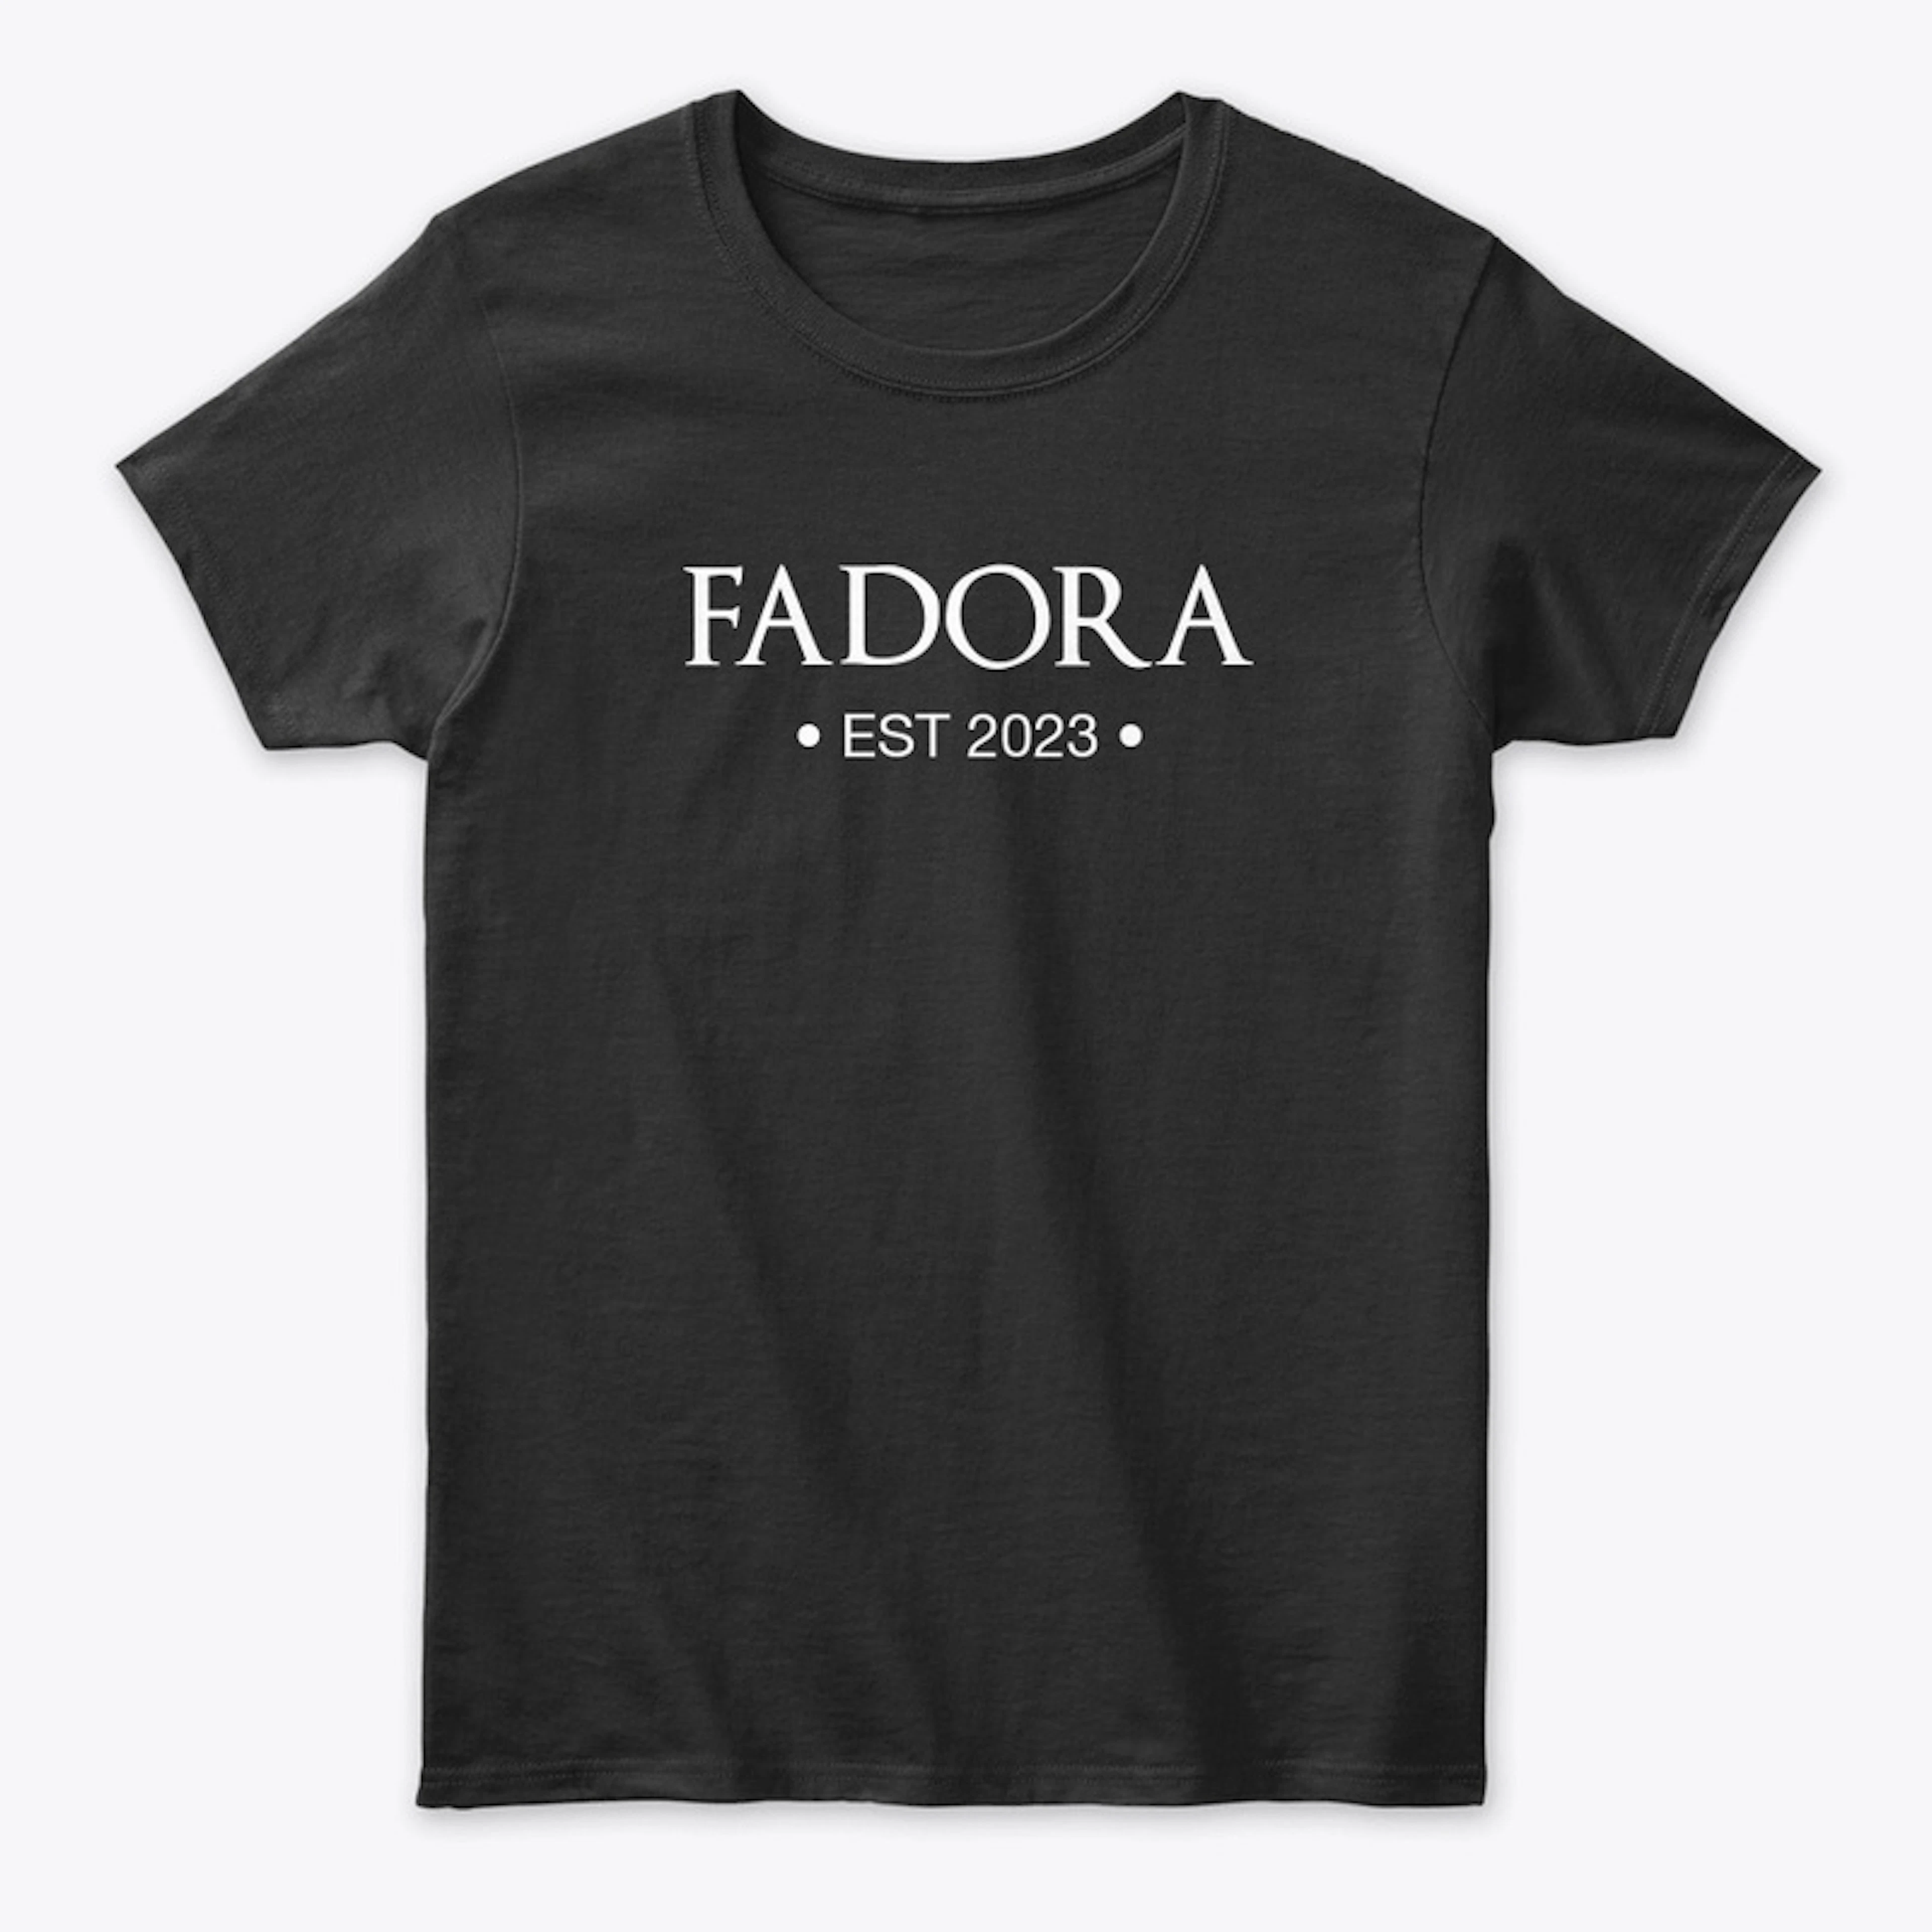 FADORA upper body apparel